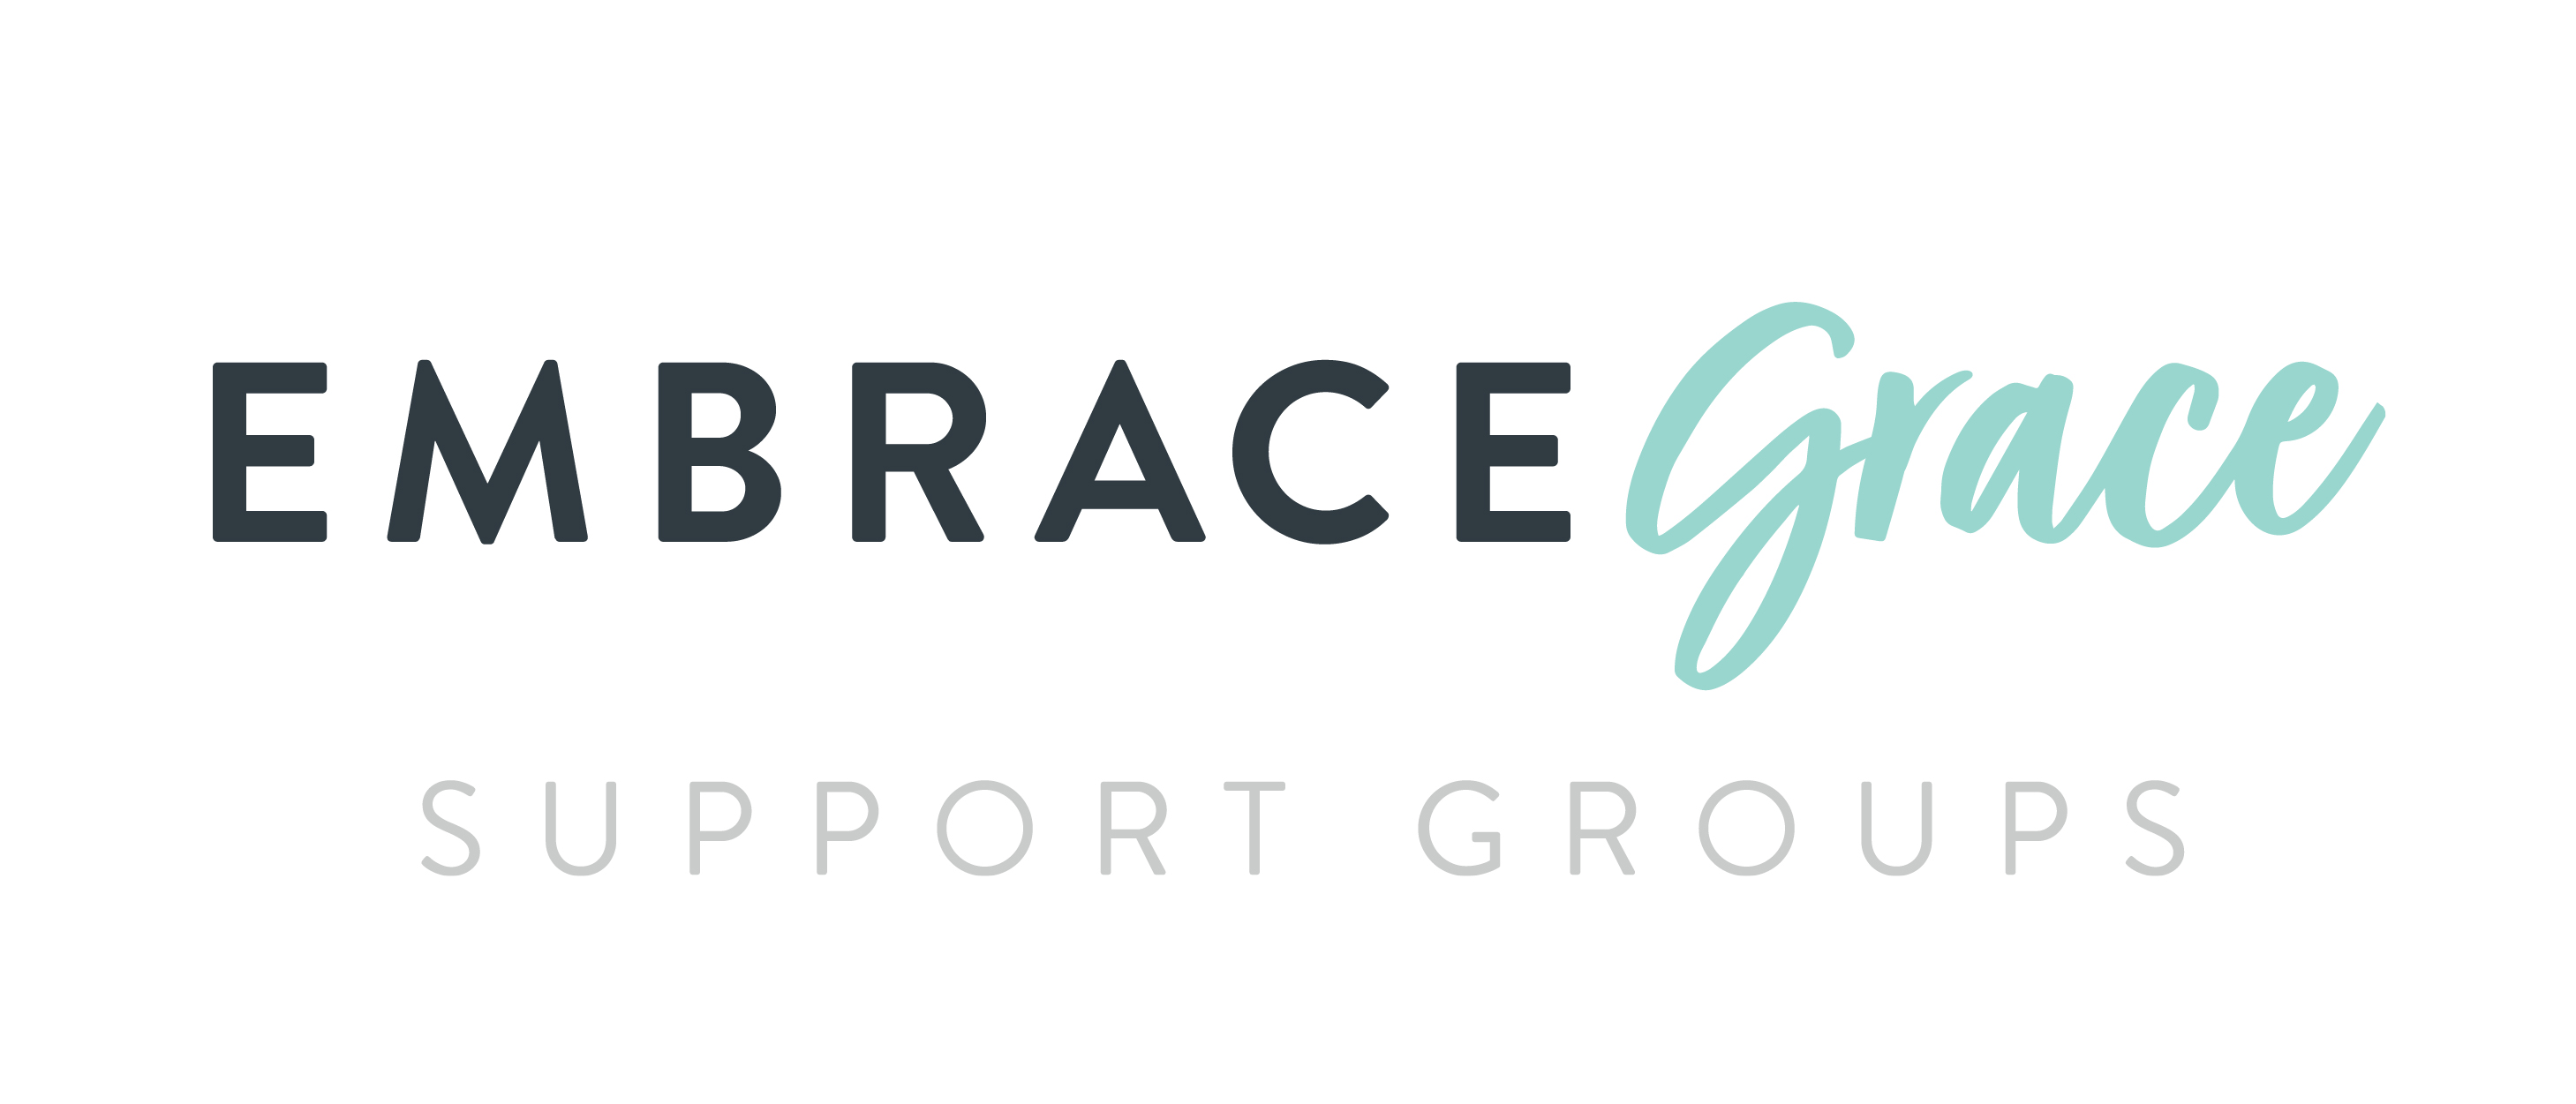 Embrace Grace, Inc.